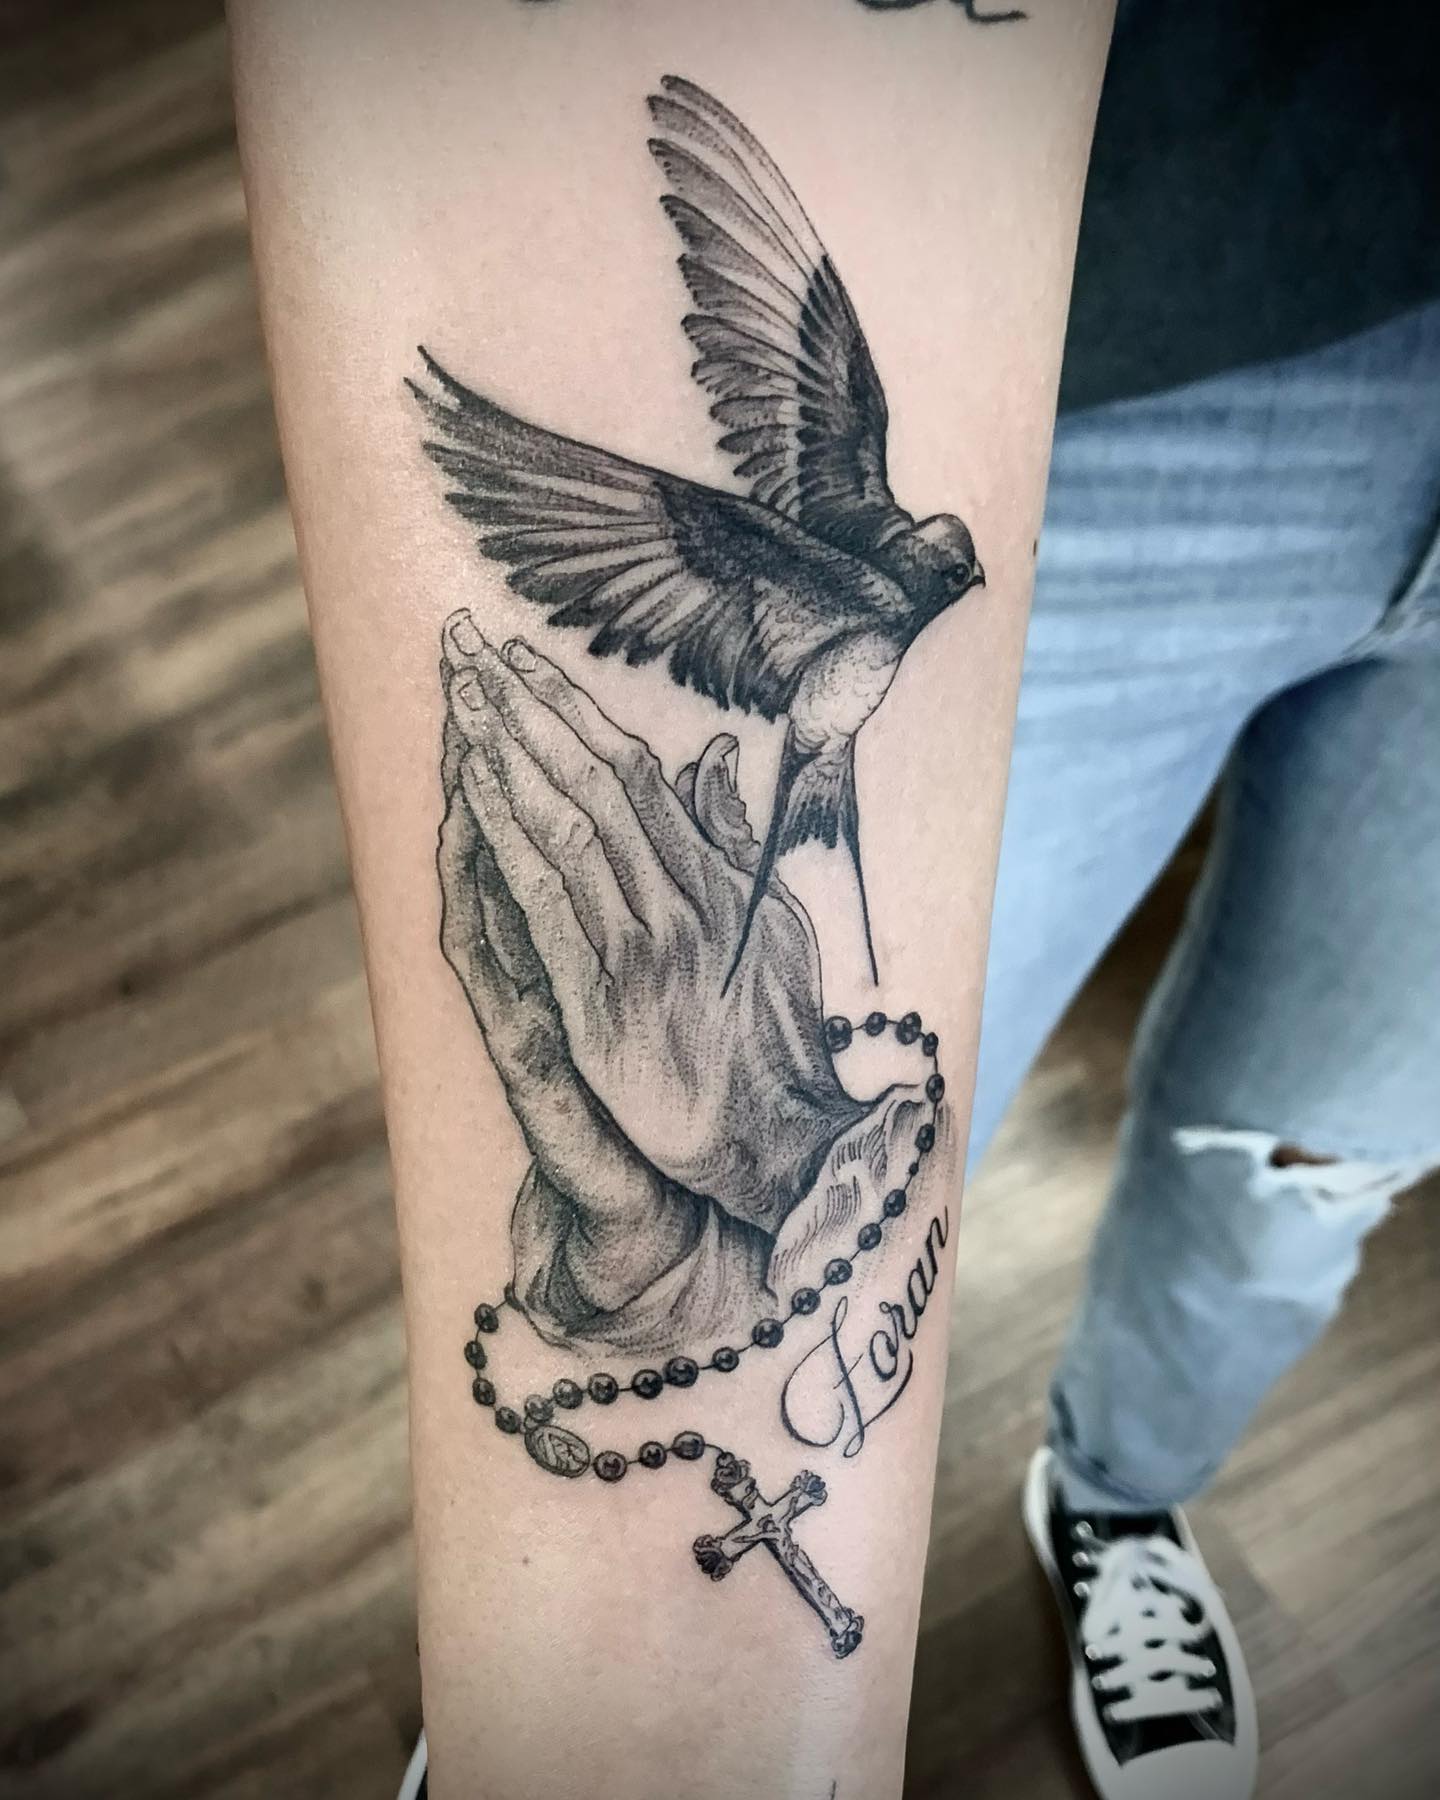 Tatuaje de ave y manos rezando